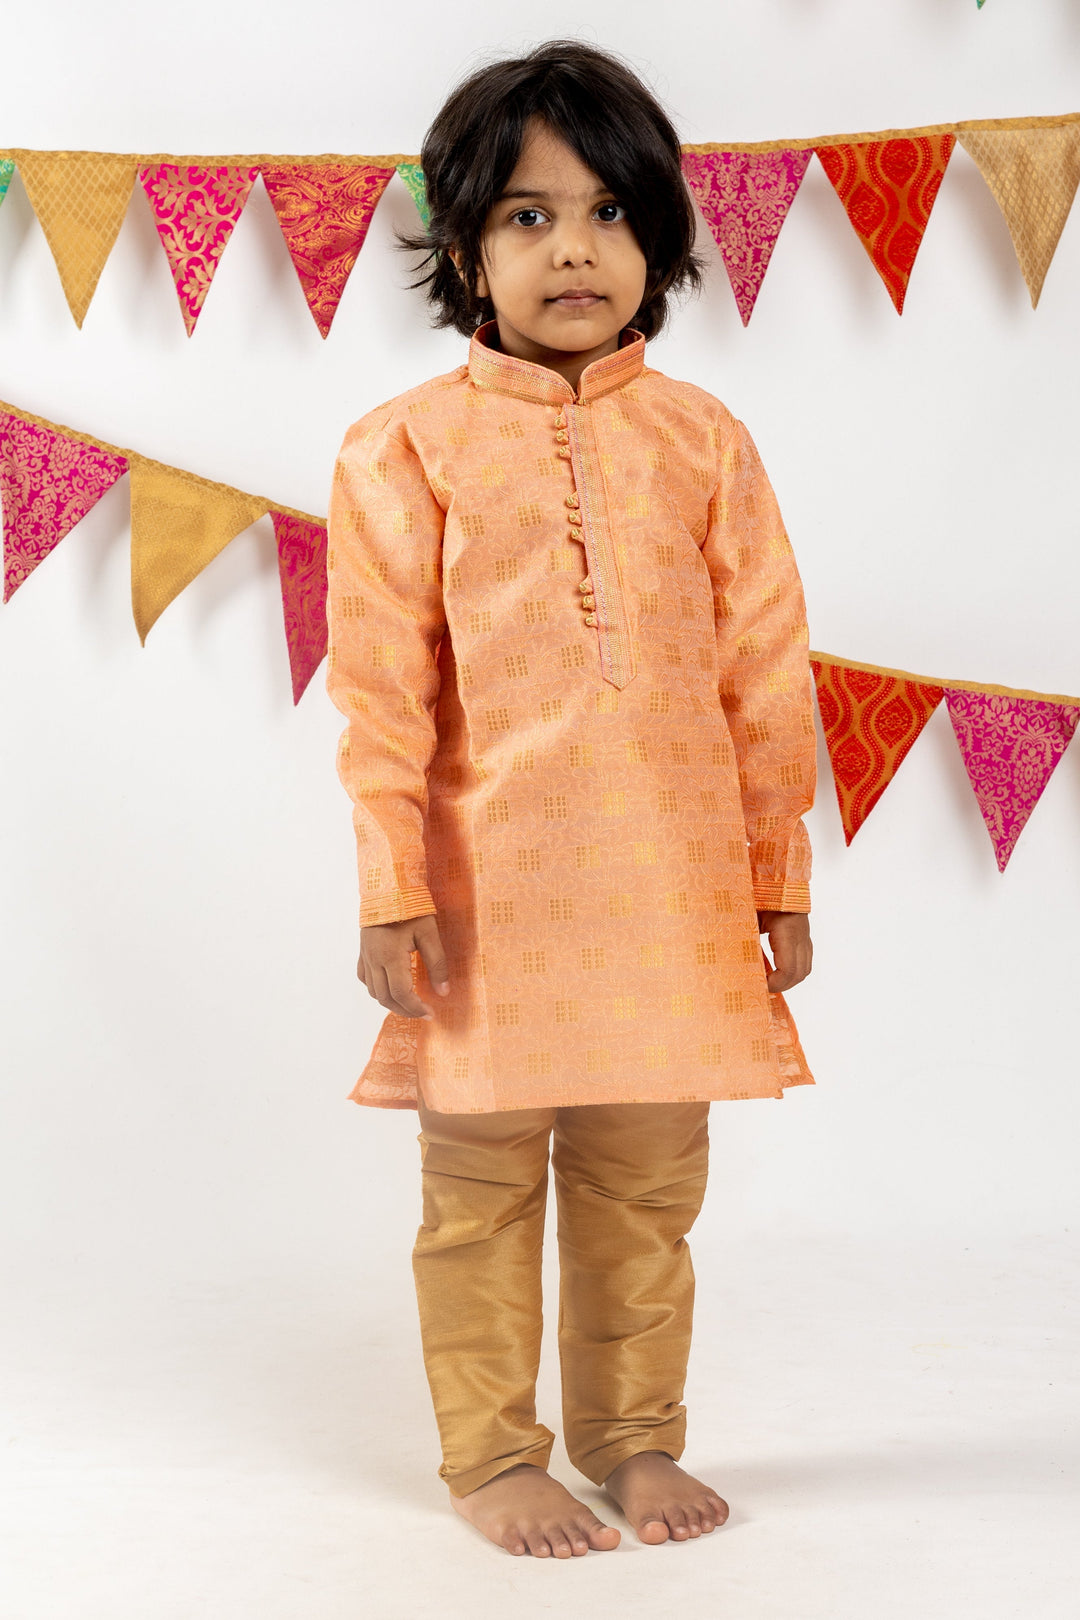 The Nesavu Ethnic Sets Peach Pink Traditional Indian Party Wear Kurta Suit For Baby Boys psr silks Nesavu 14 (6M) / pink BES171